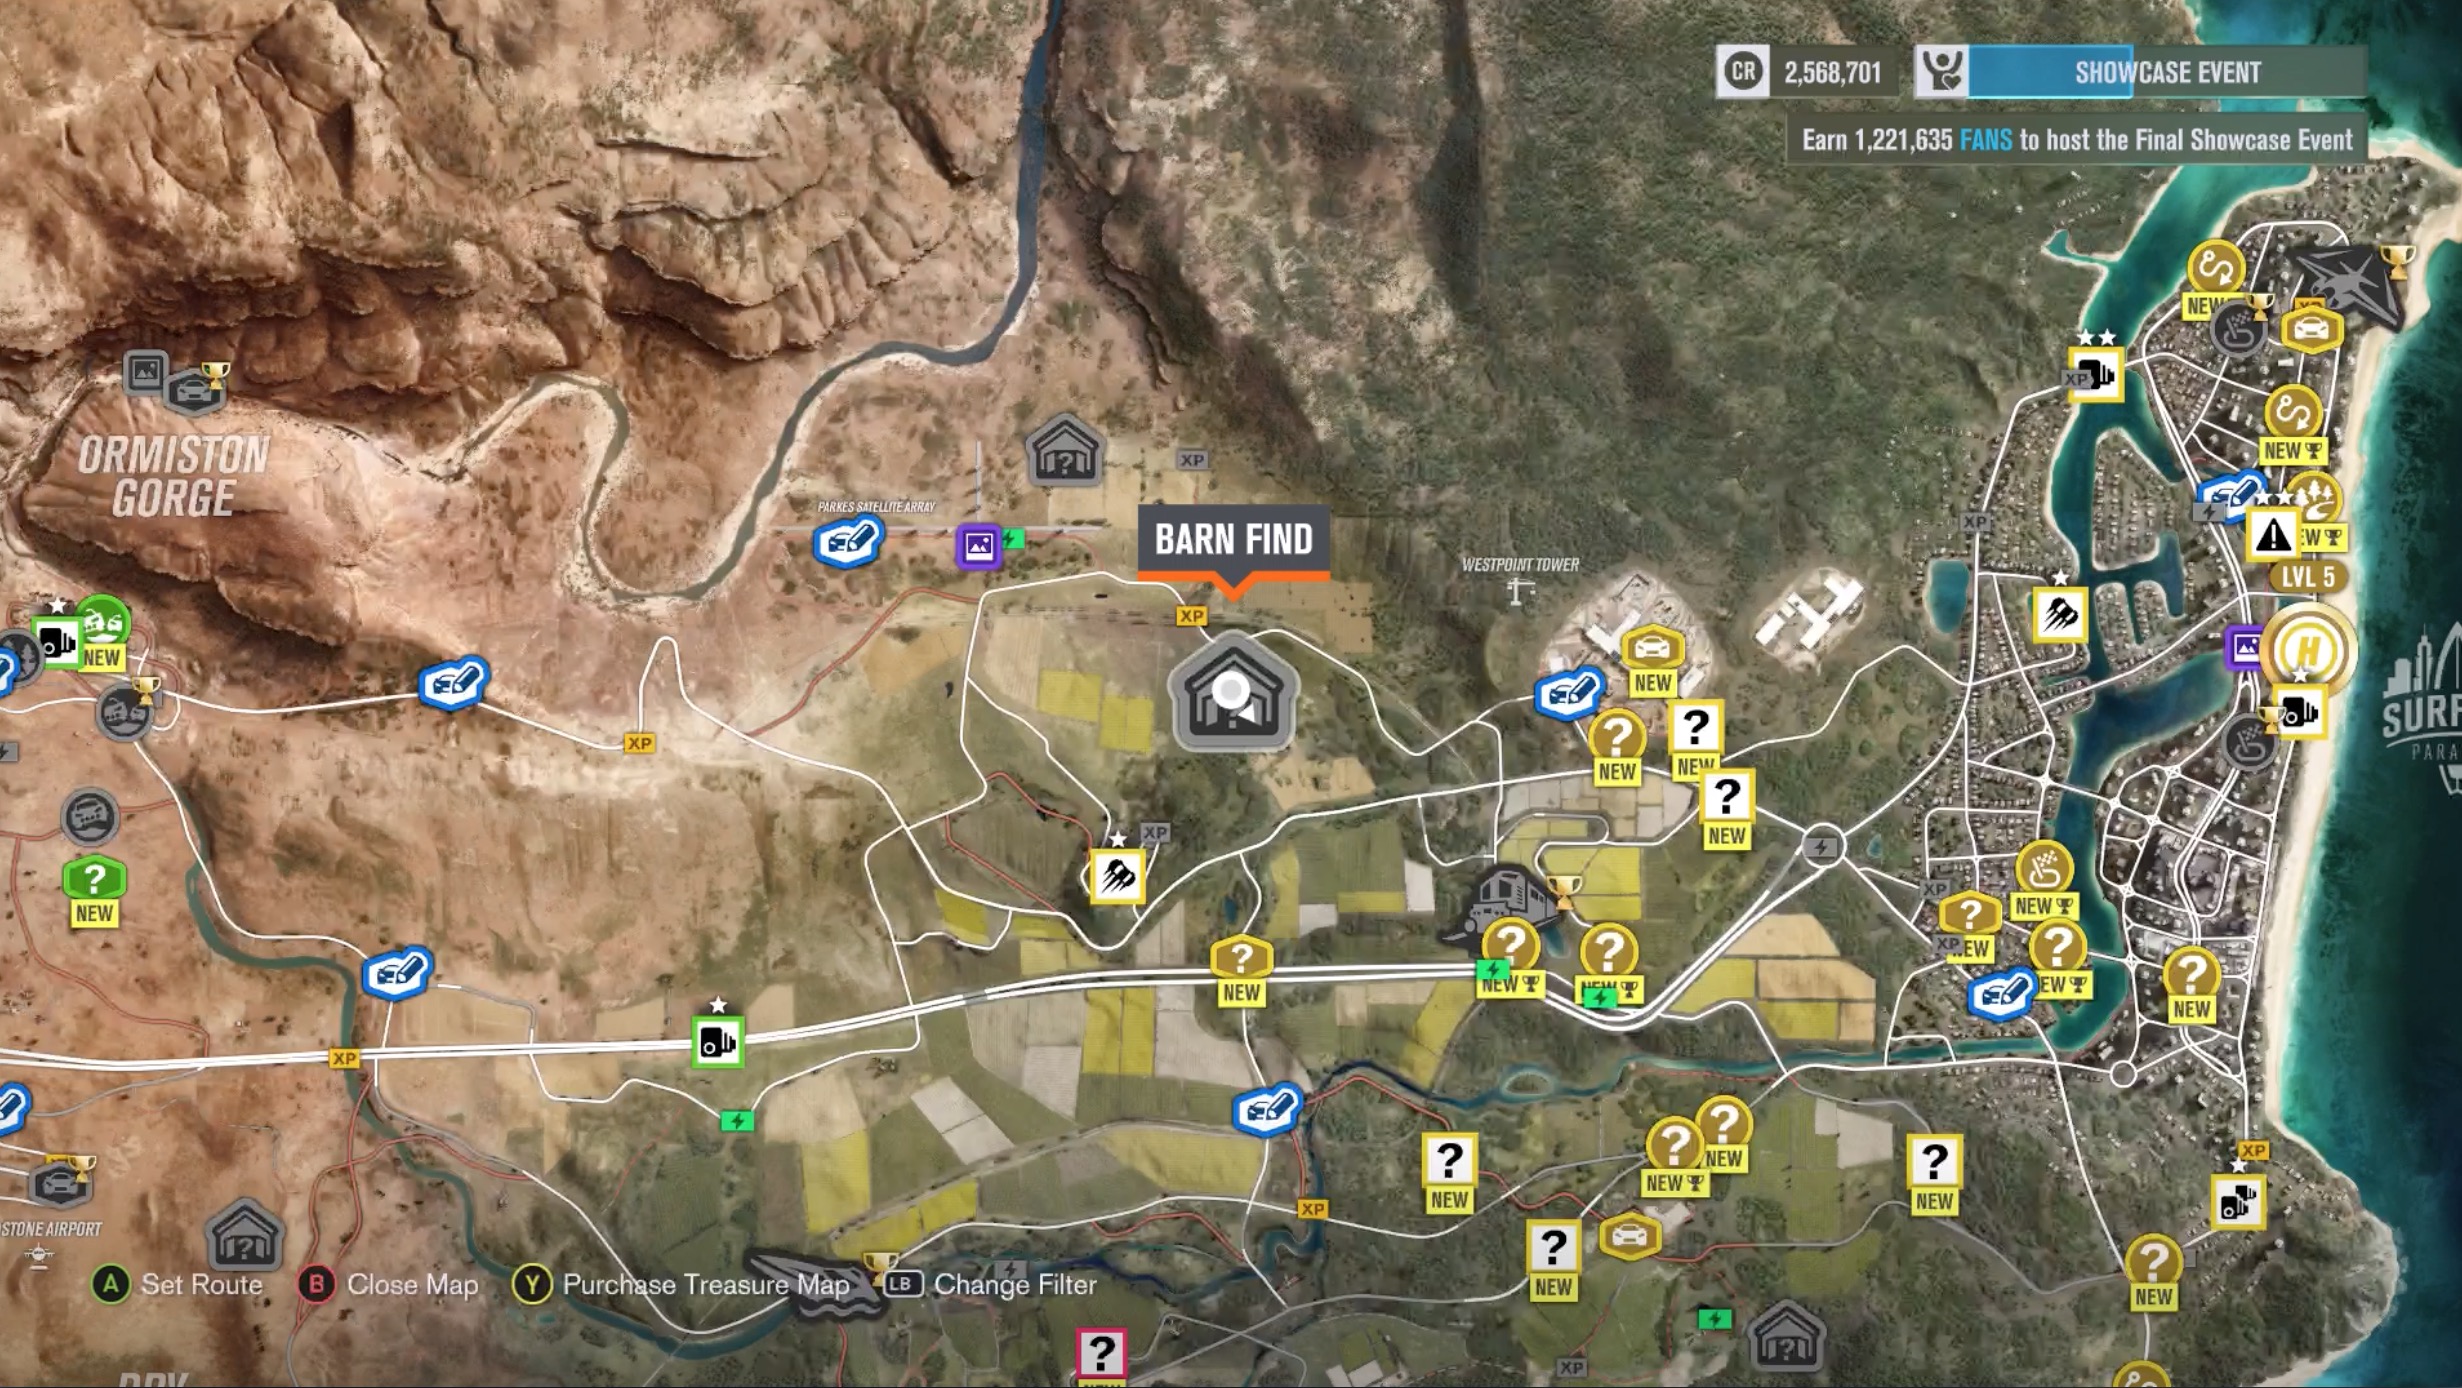 Forza Horizon 3 Barn Find locations guide: Page 3 | GamesRadar+